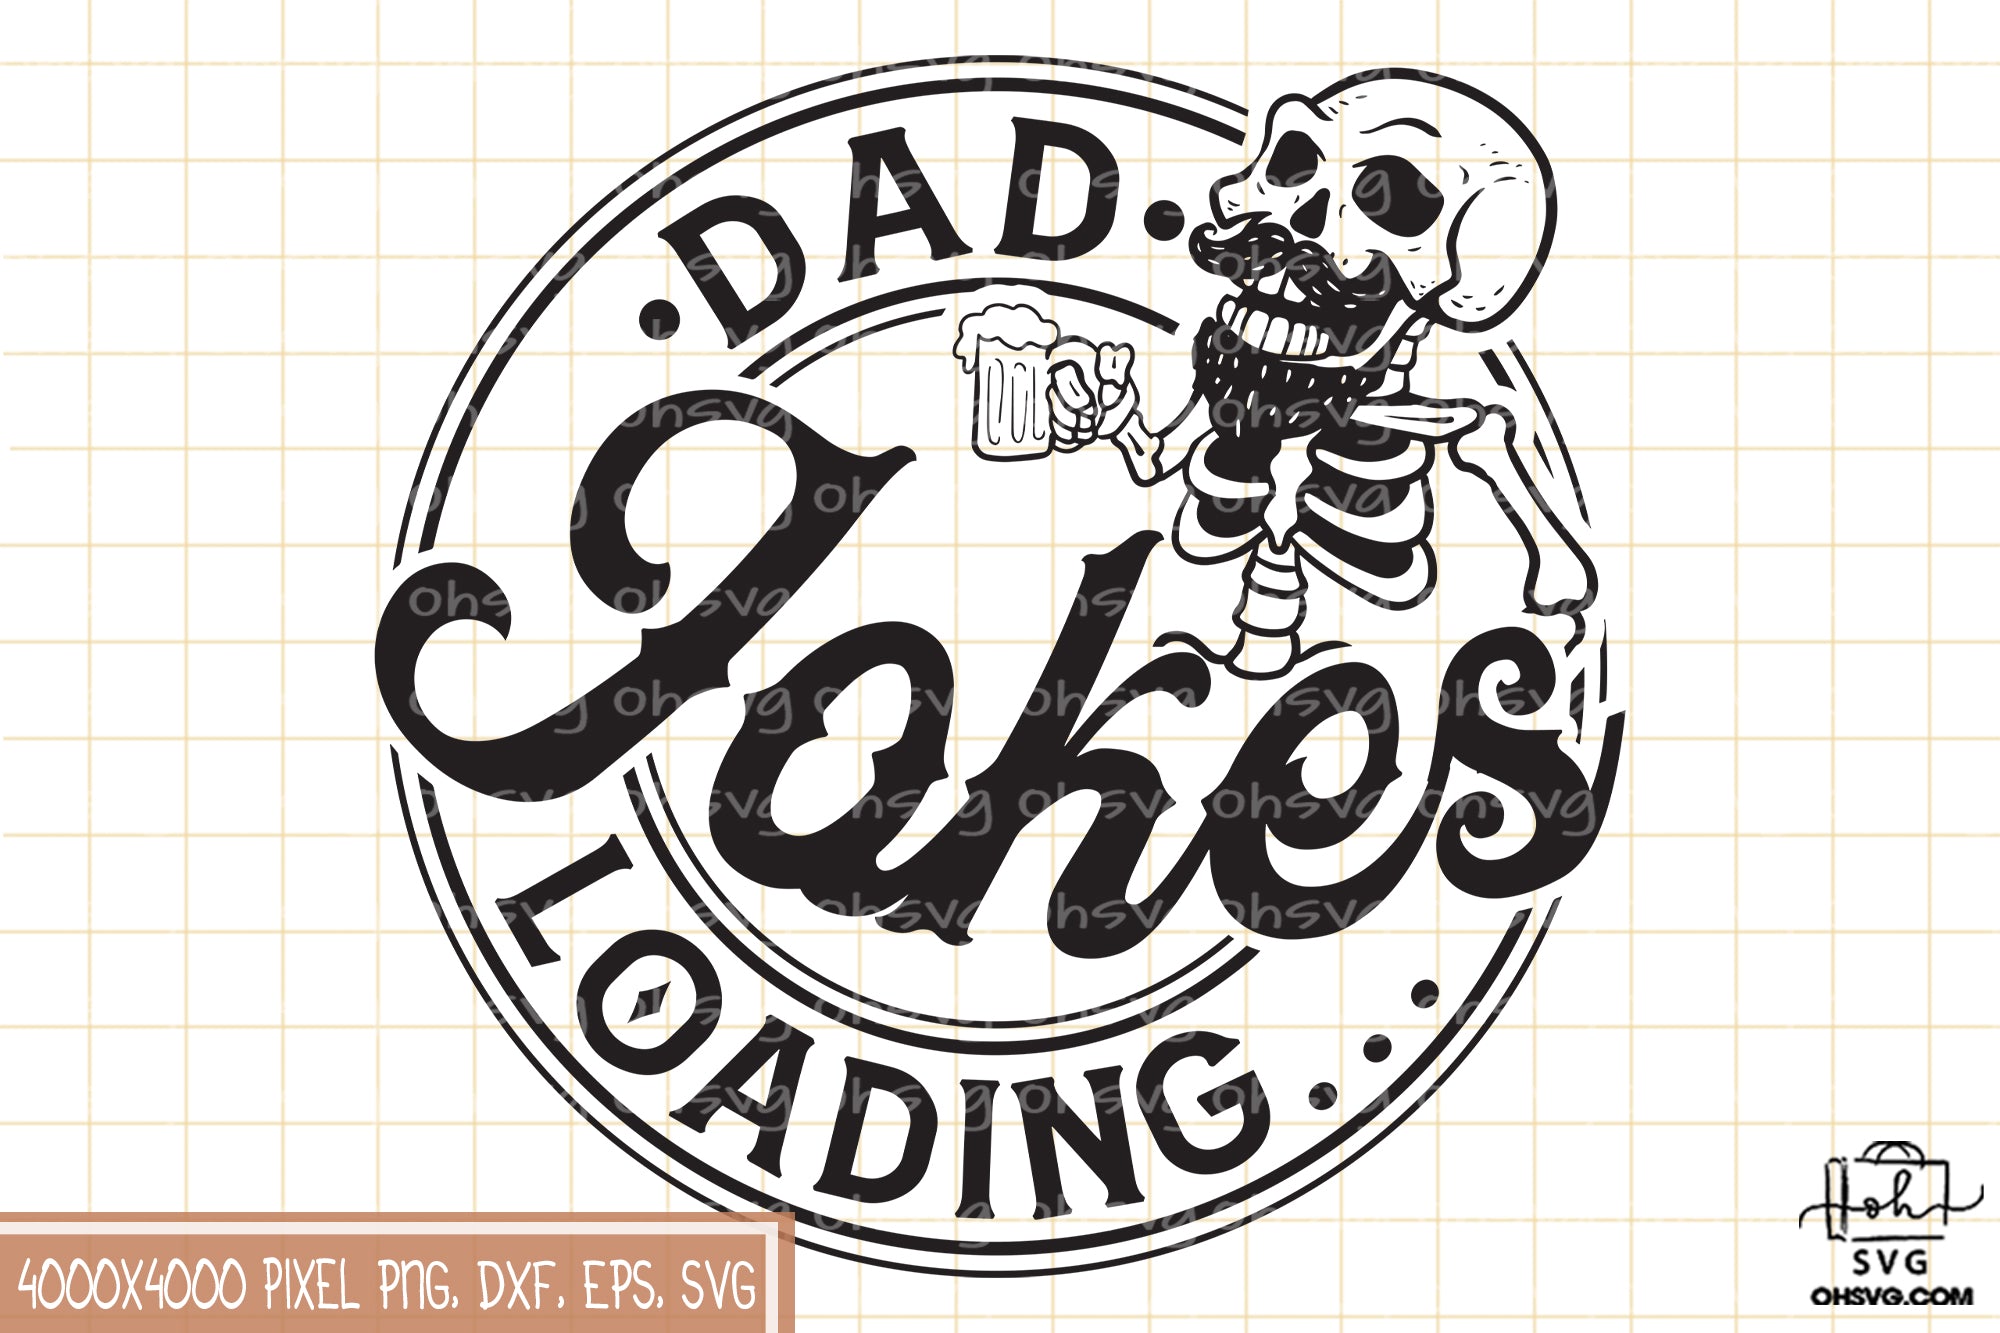 Dad Jokes Loading SVG, Stepdad SVG, Father Day SVG